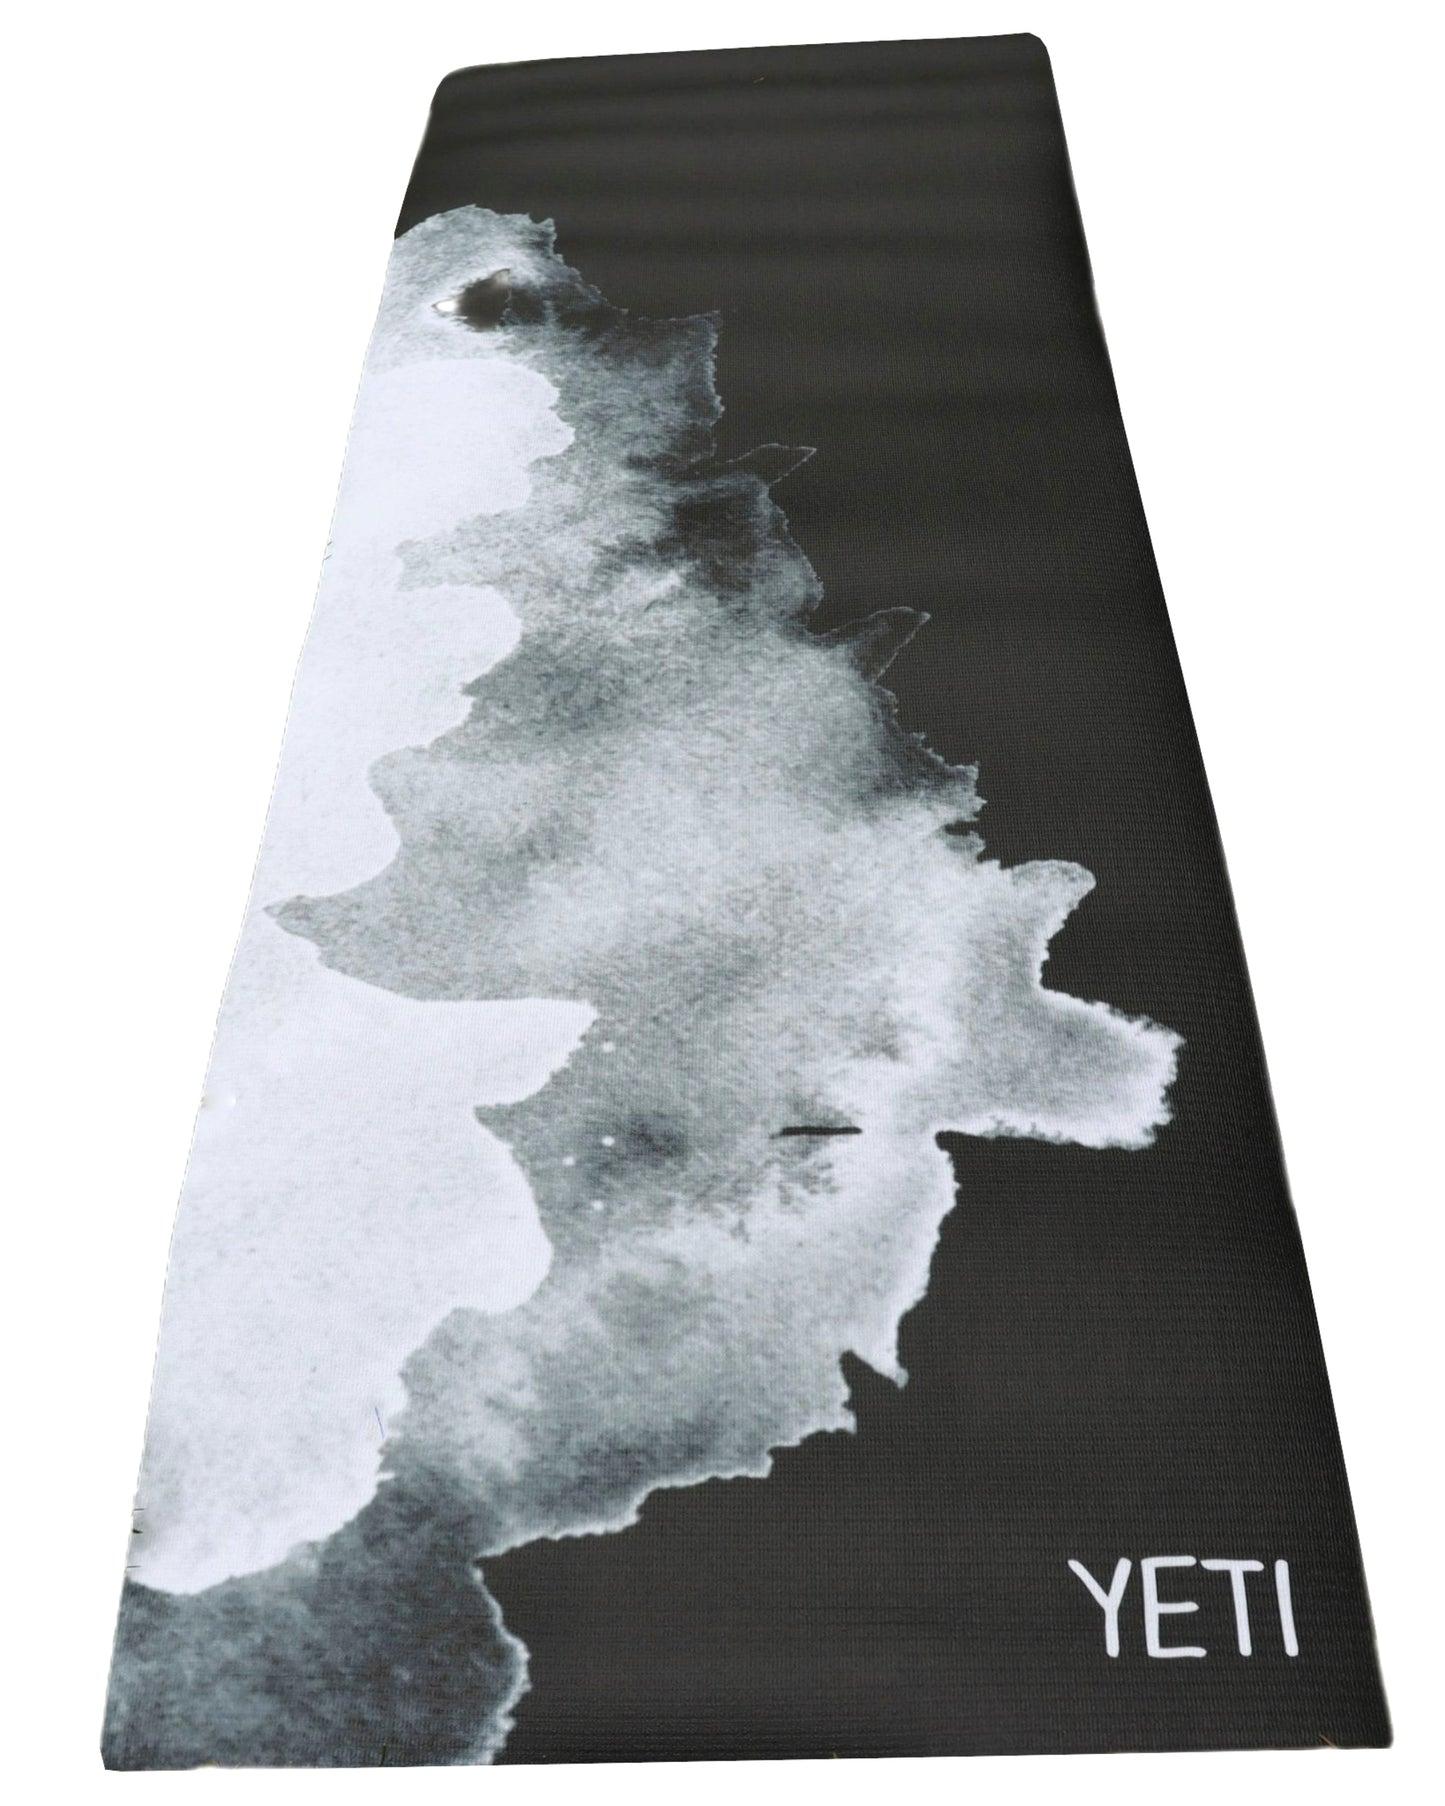 Yune Yoga Mat Black1 188cm x61 cm x0,6cm